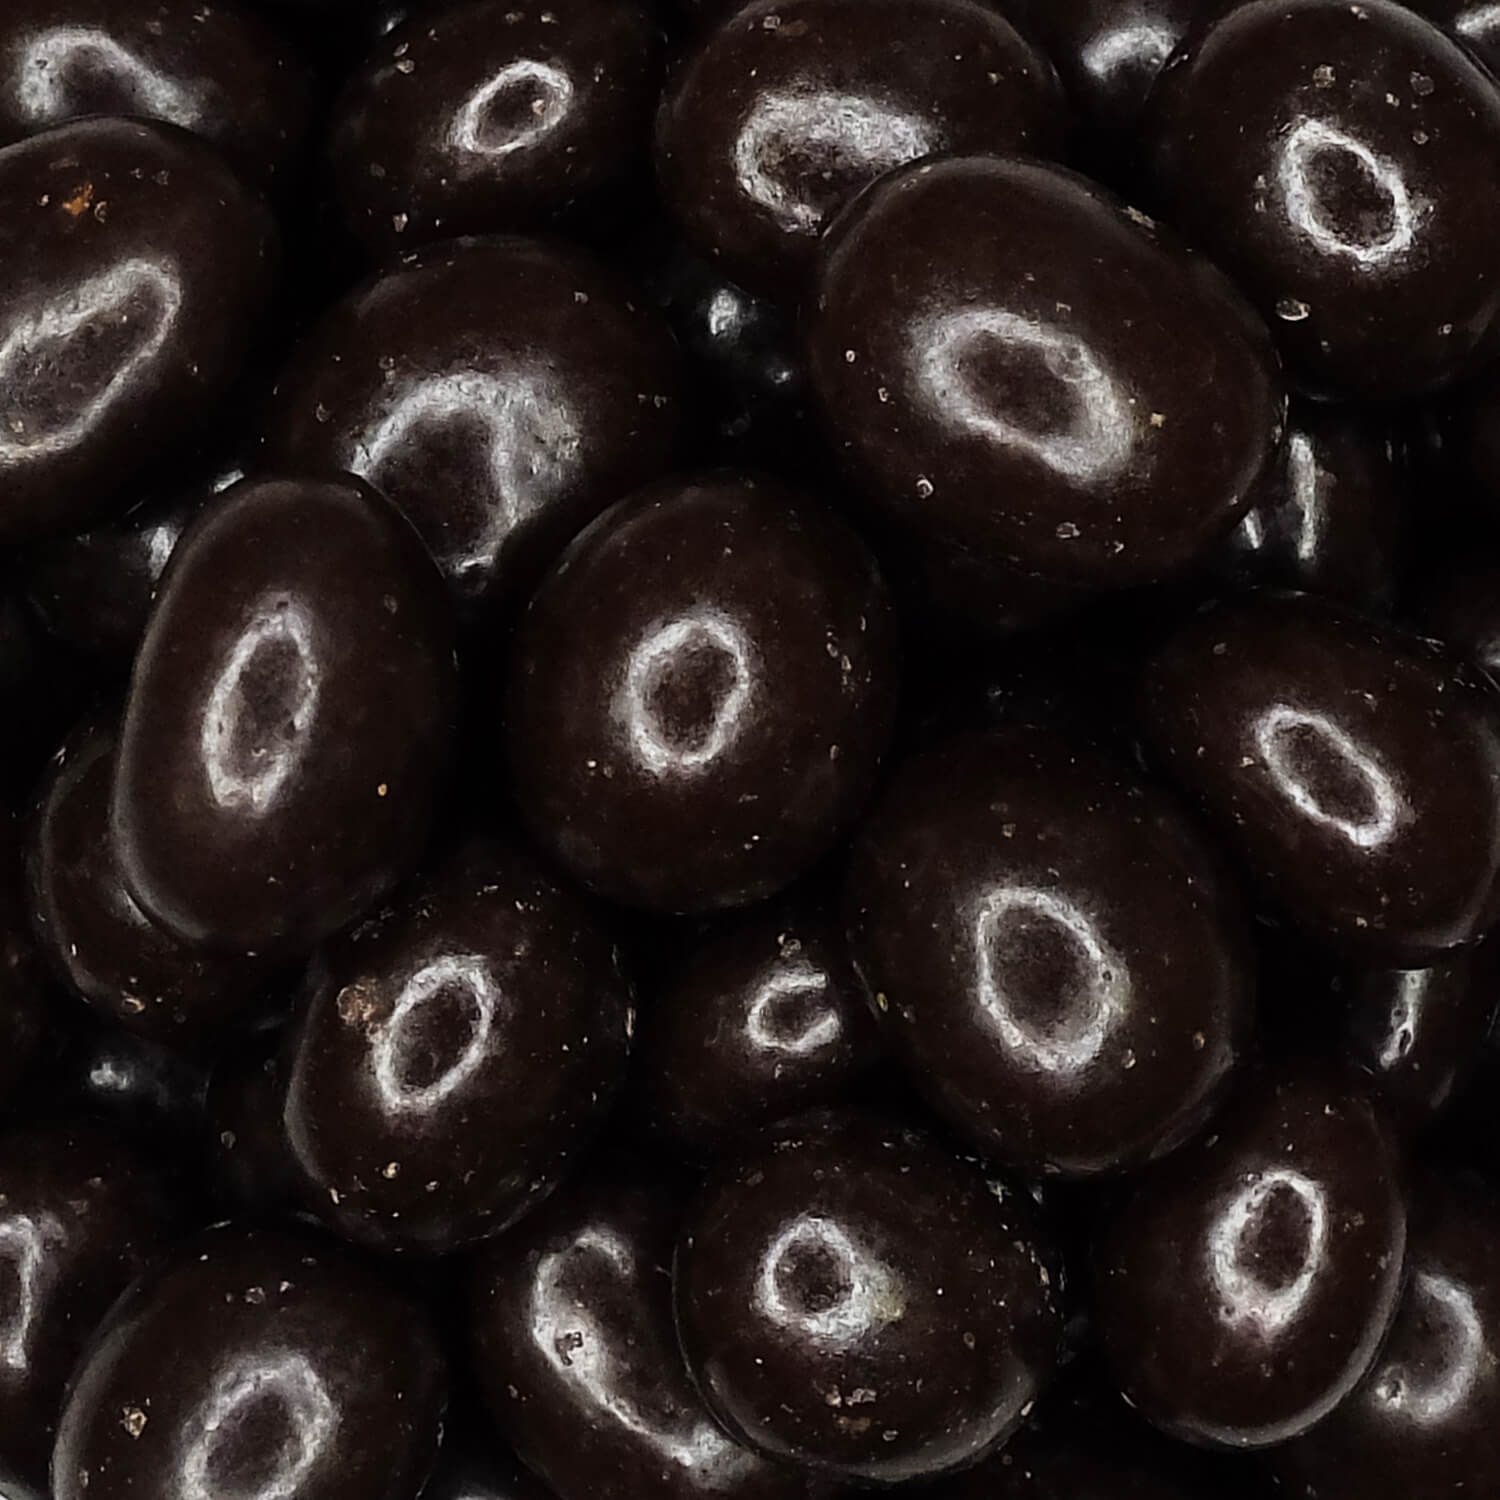 Dark chocolate coffee beans